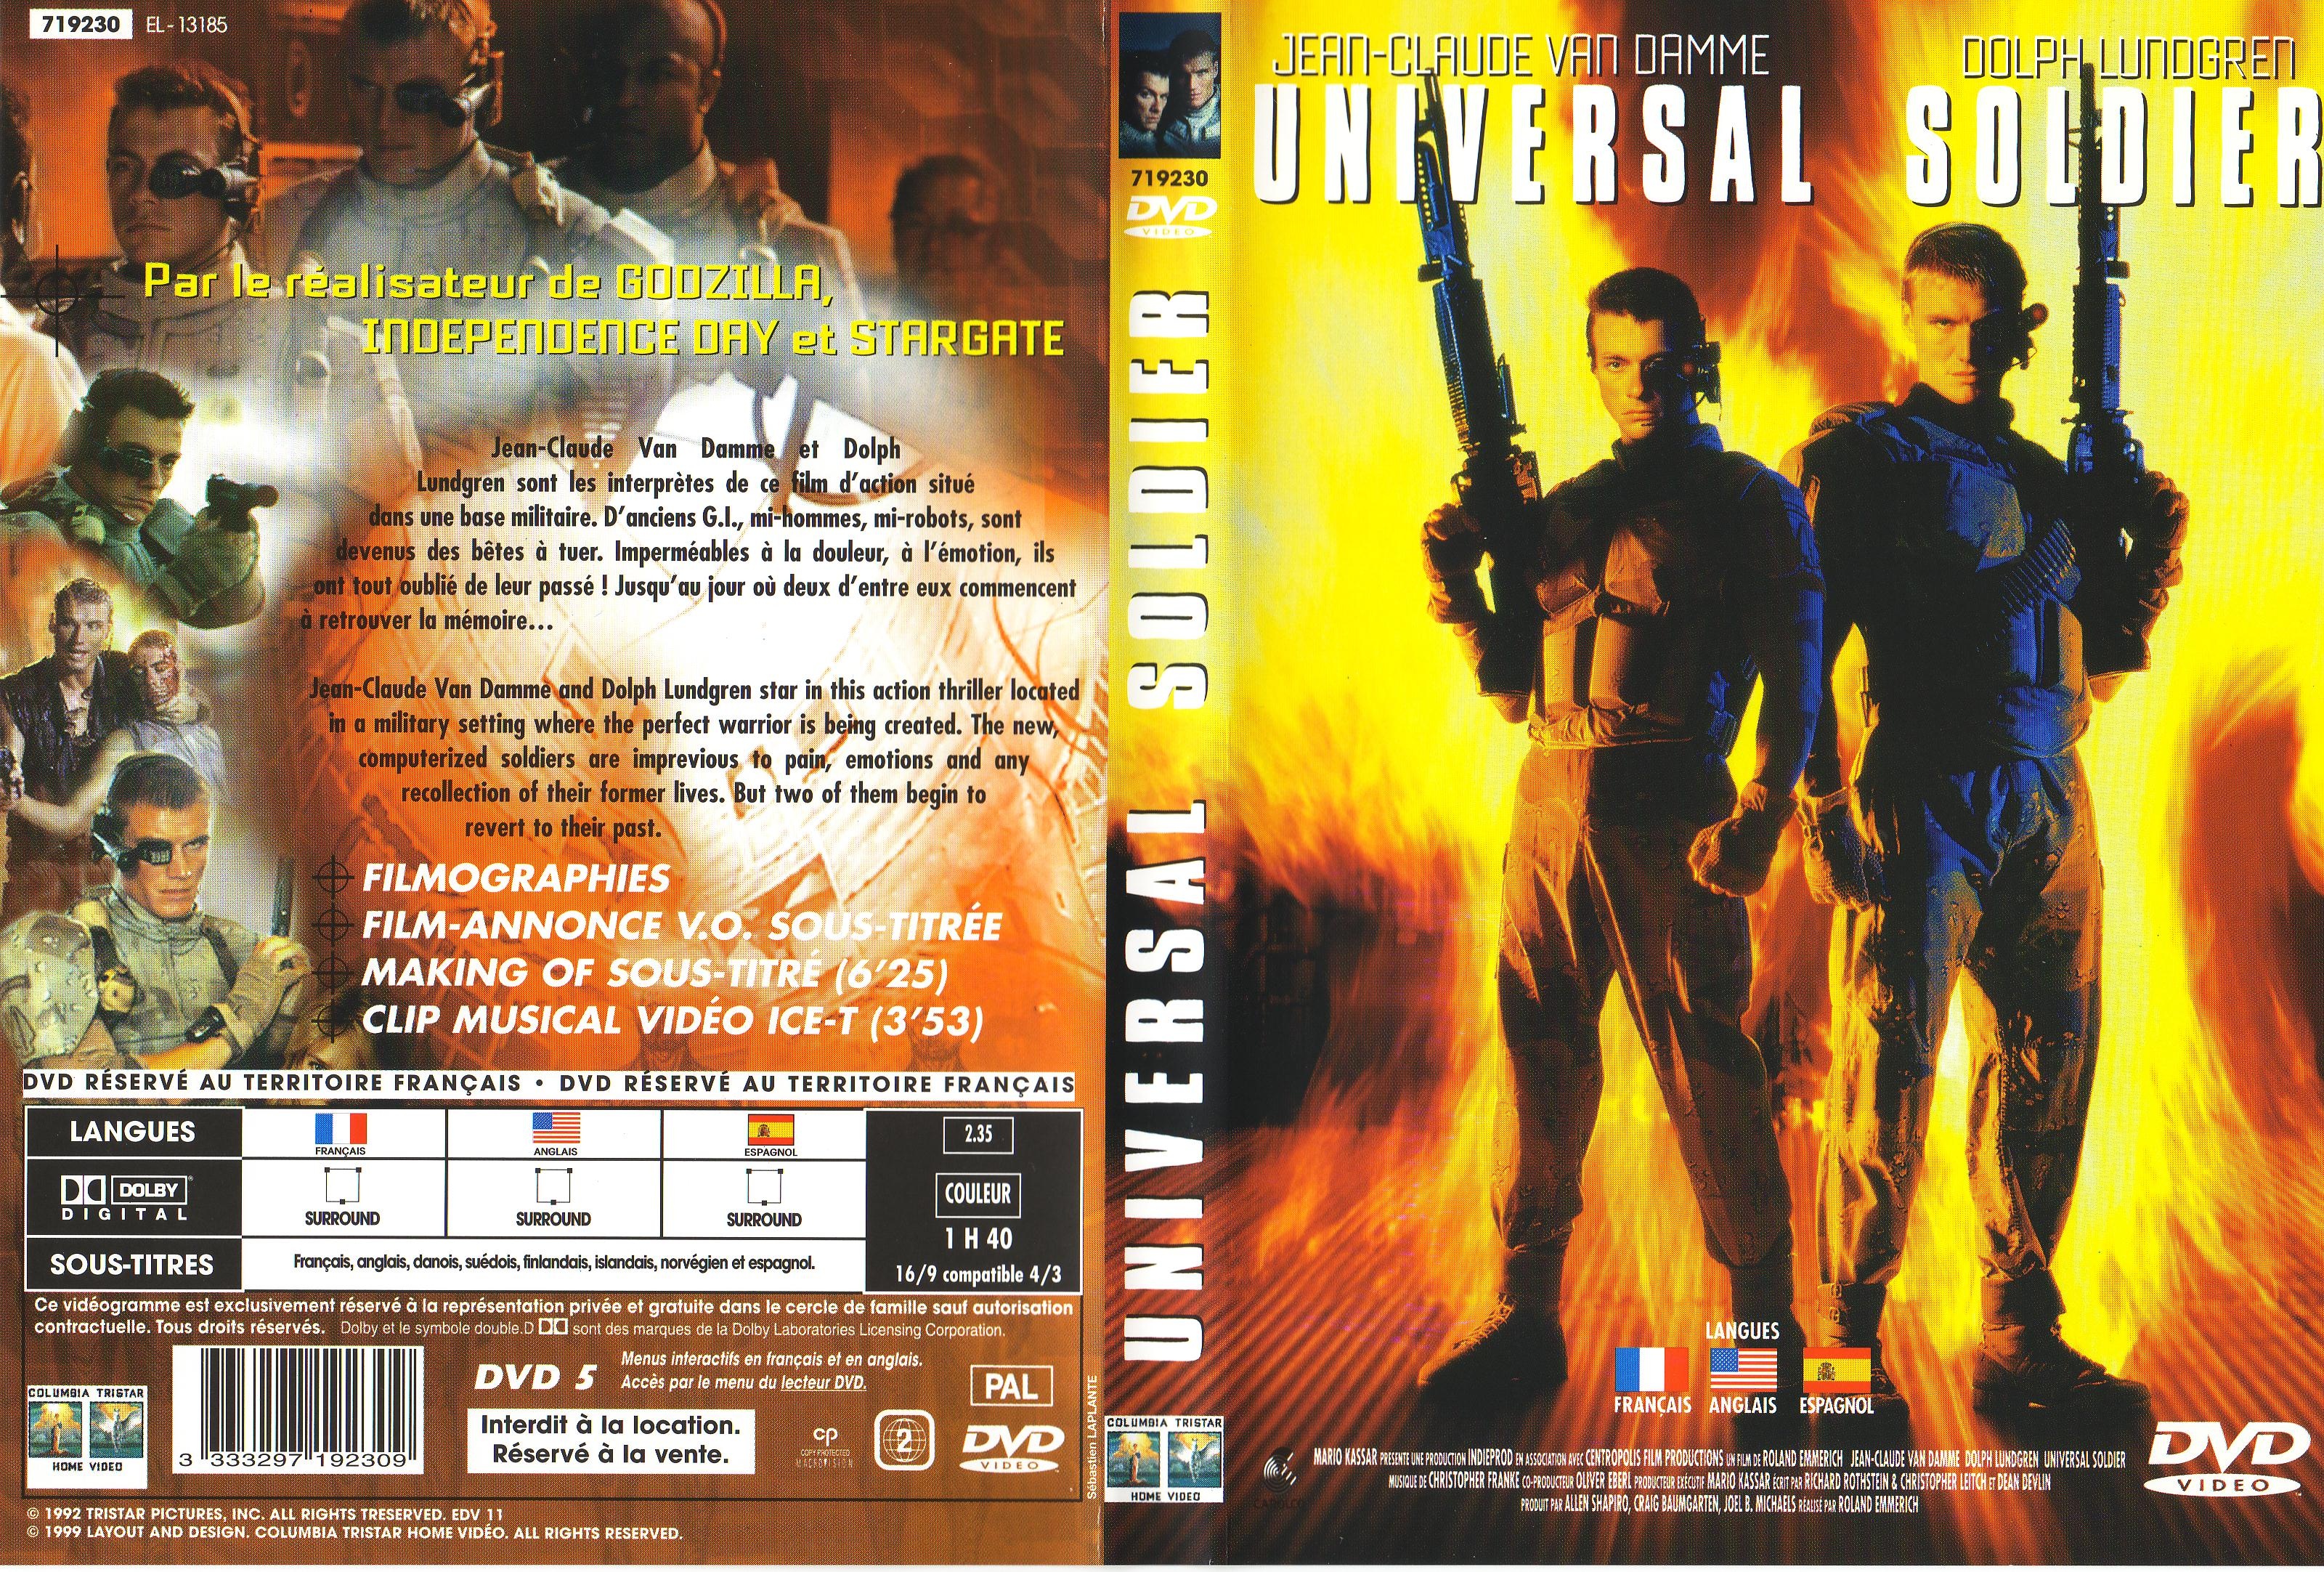 Jaquette DVD Universal soldier v2